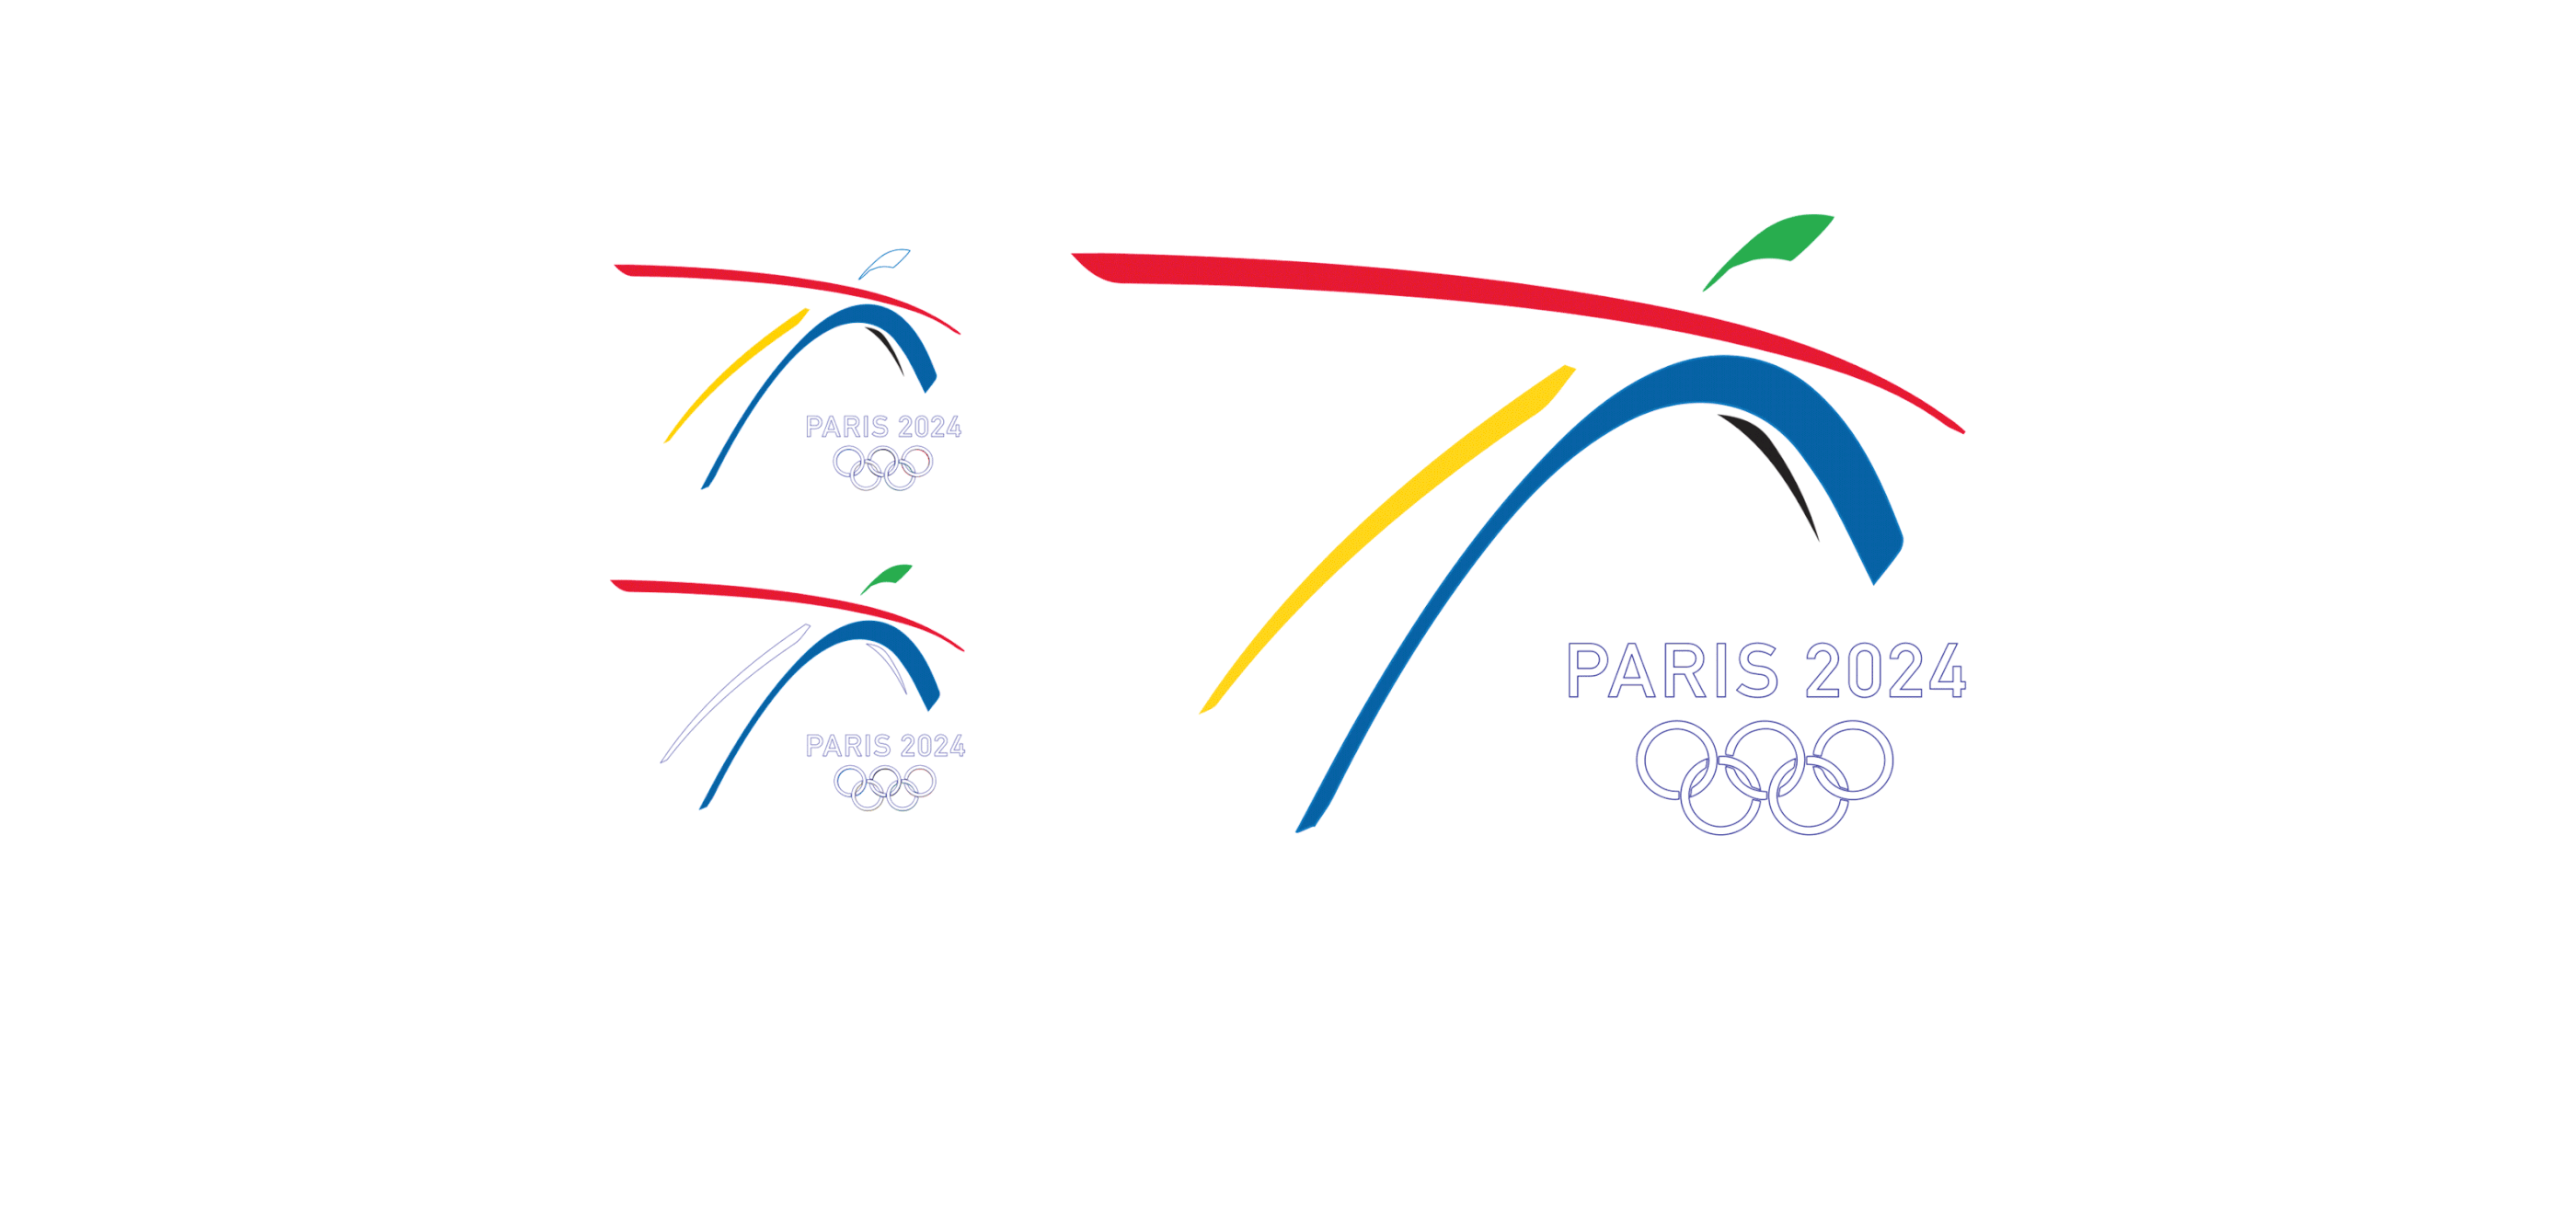 PARIS 2024 Olympic Games on Behance